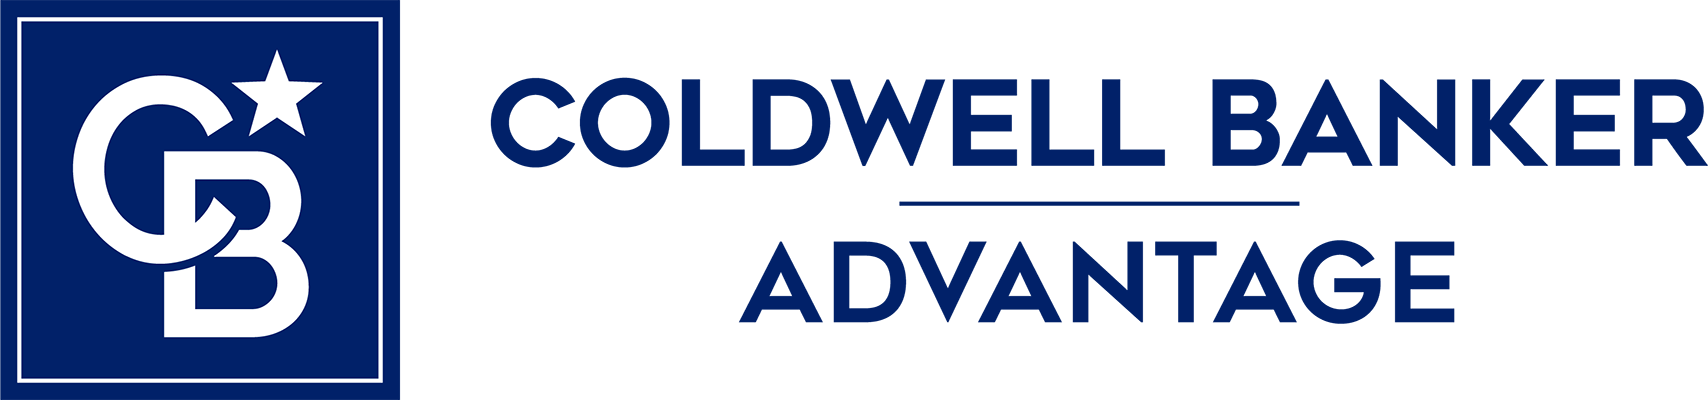 Minoo Rakhsha - Coldwell Banker Advantage Logo